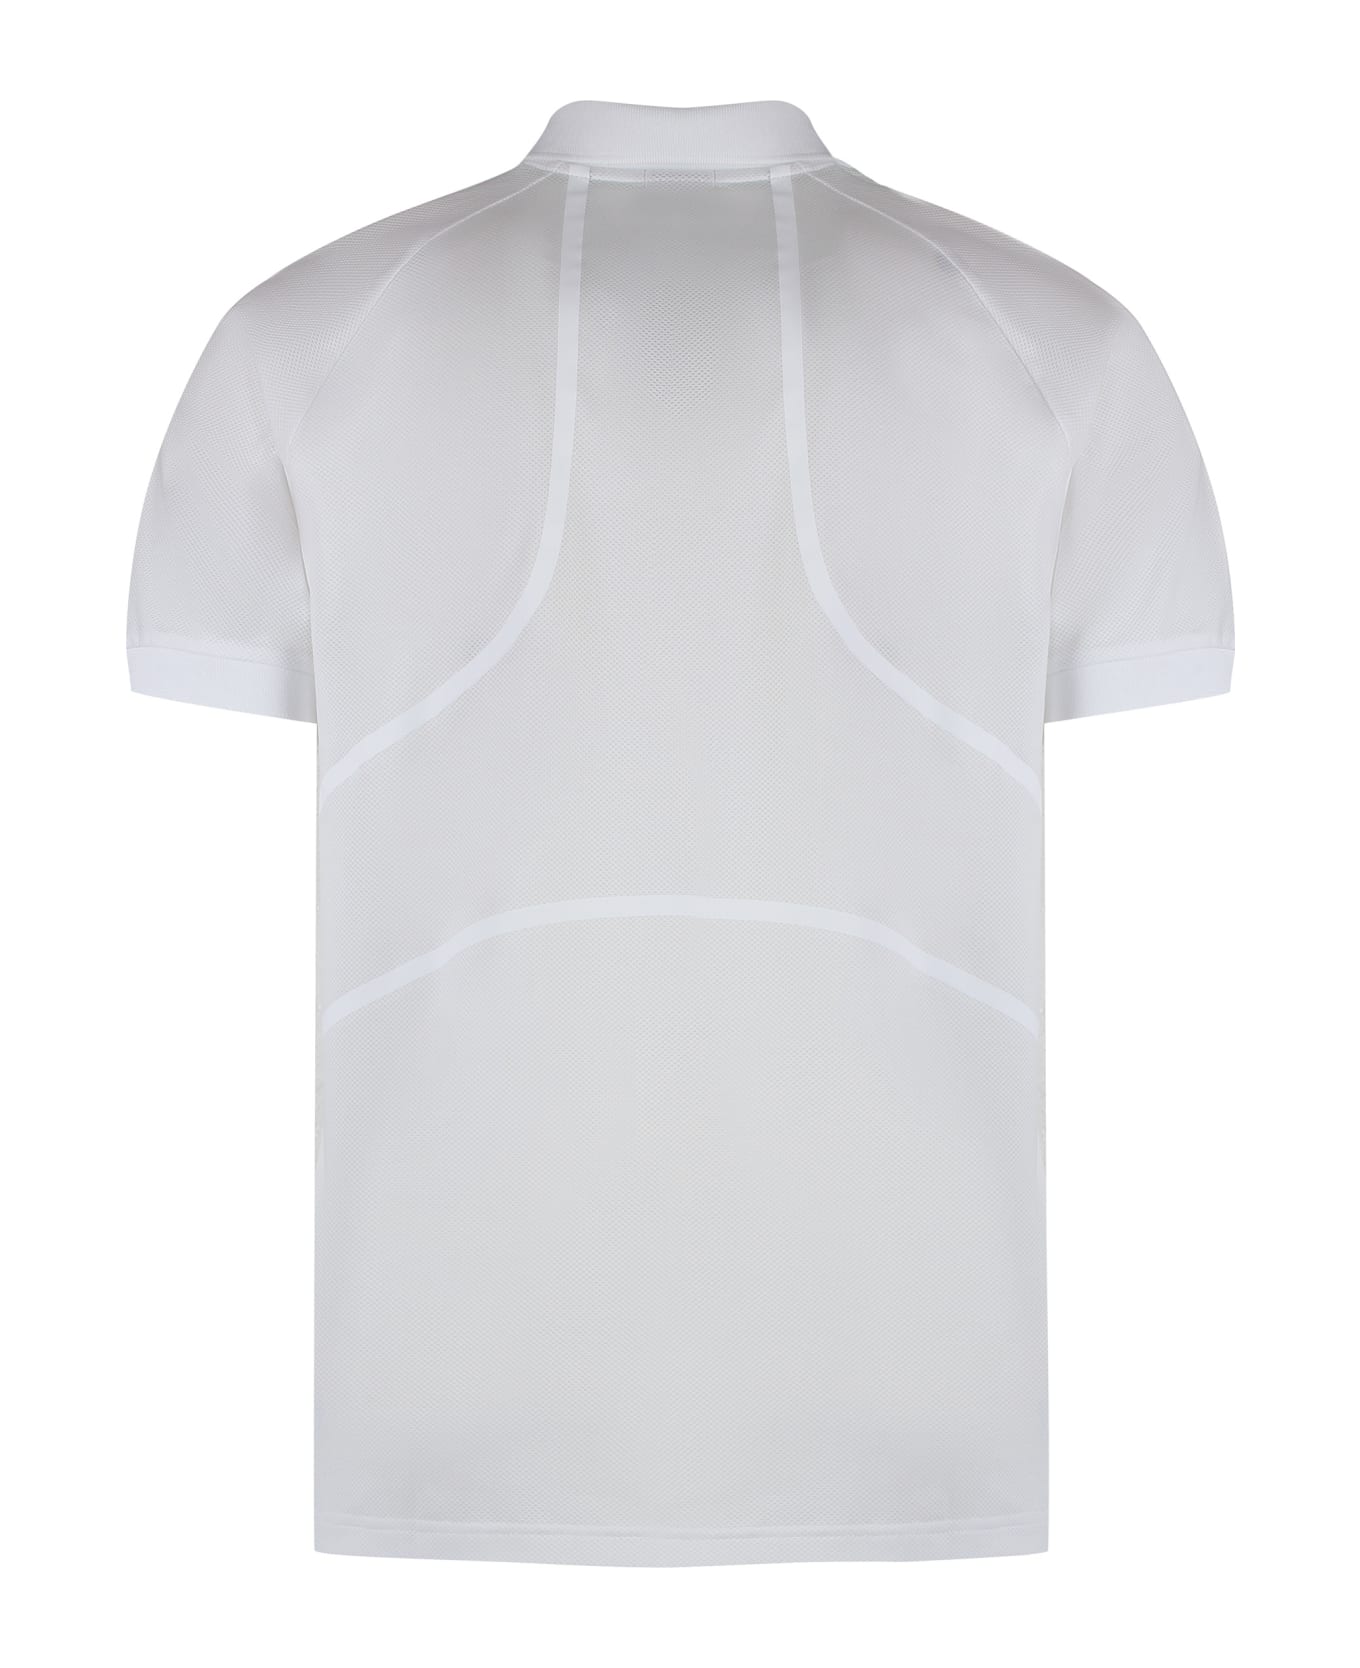 Hugo Boss Technical Fabric Polo Shirt - White